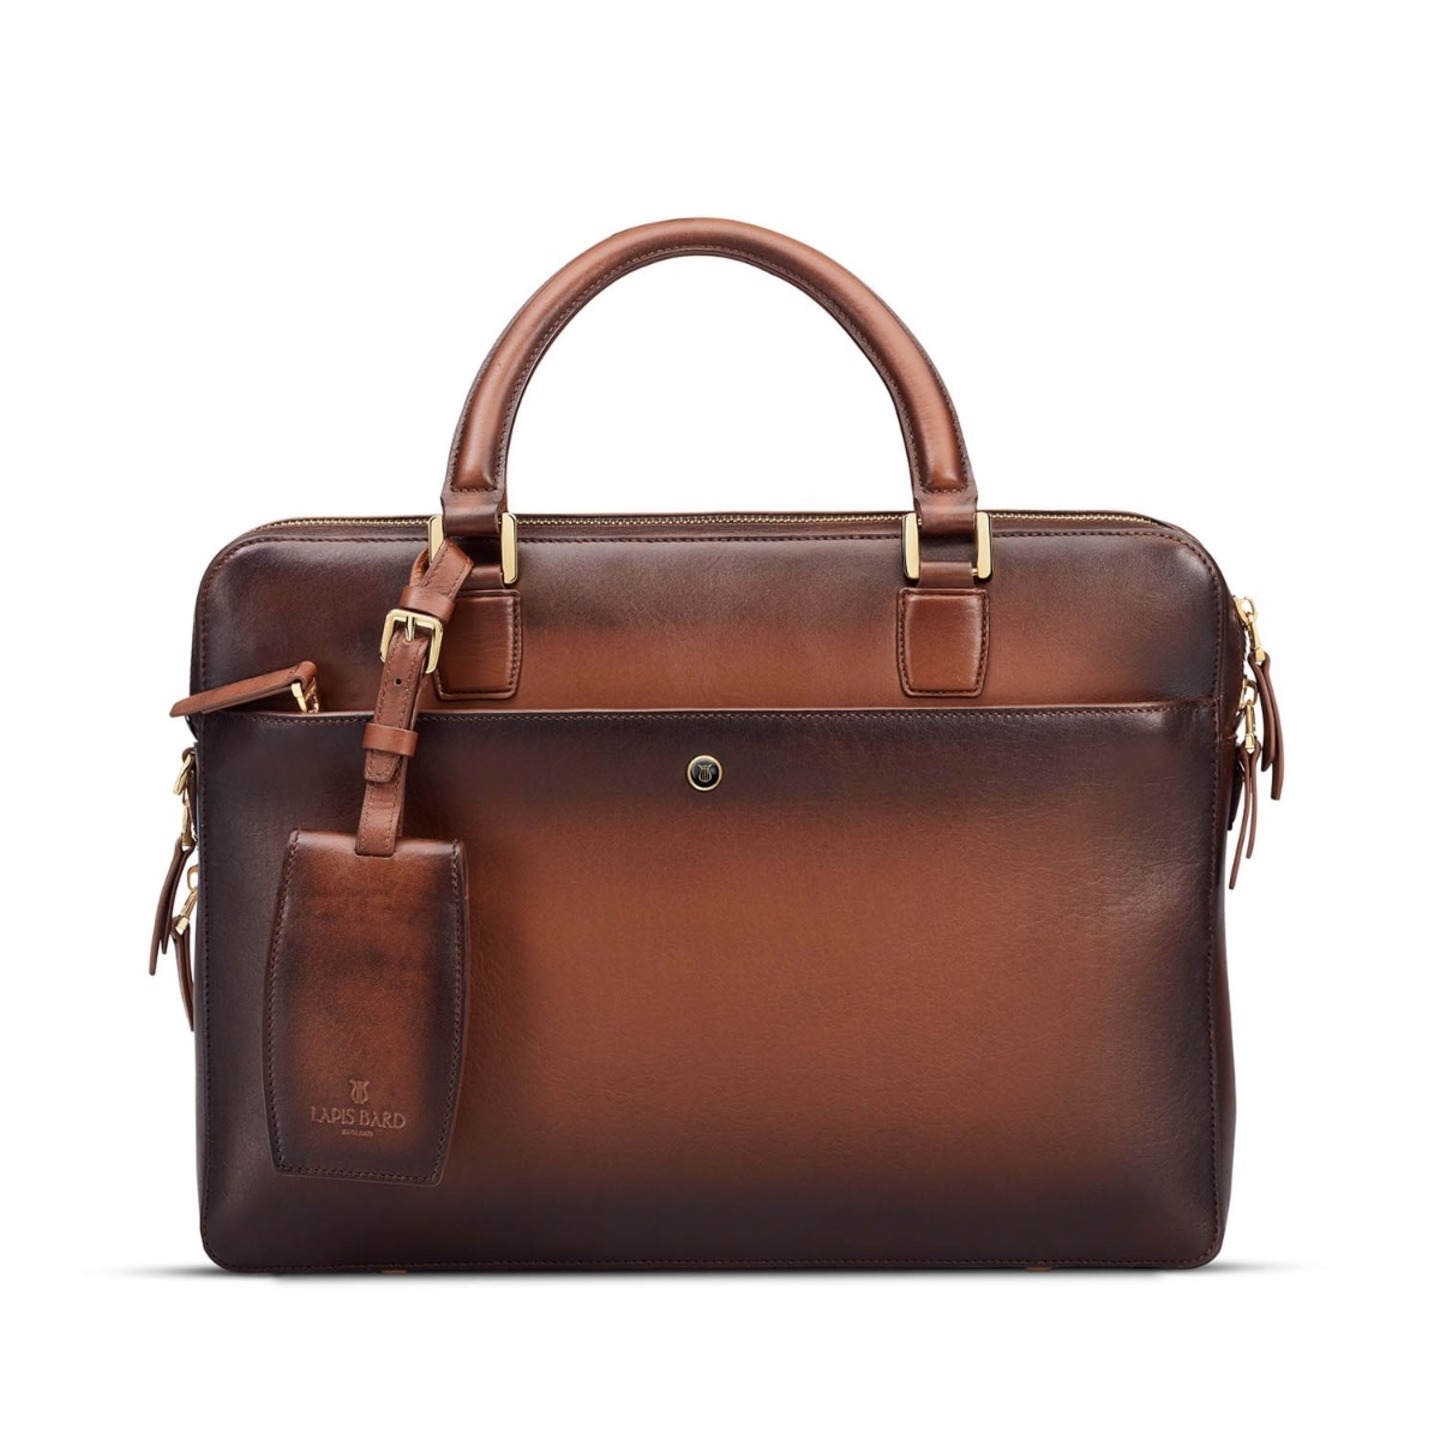 Lapis Bard Ducorium Chester Slim 14Inch Laptop Business Bag – Cognac